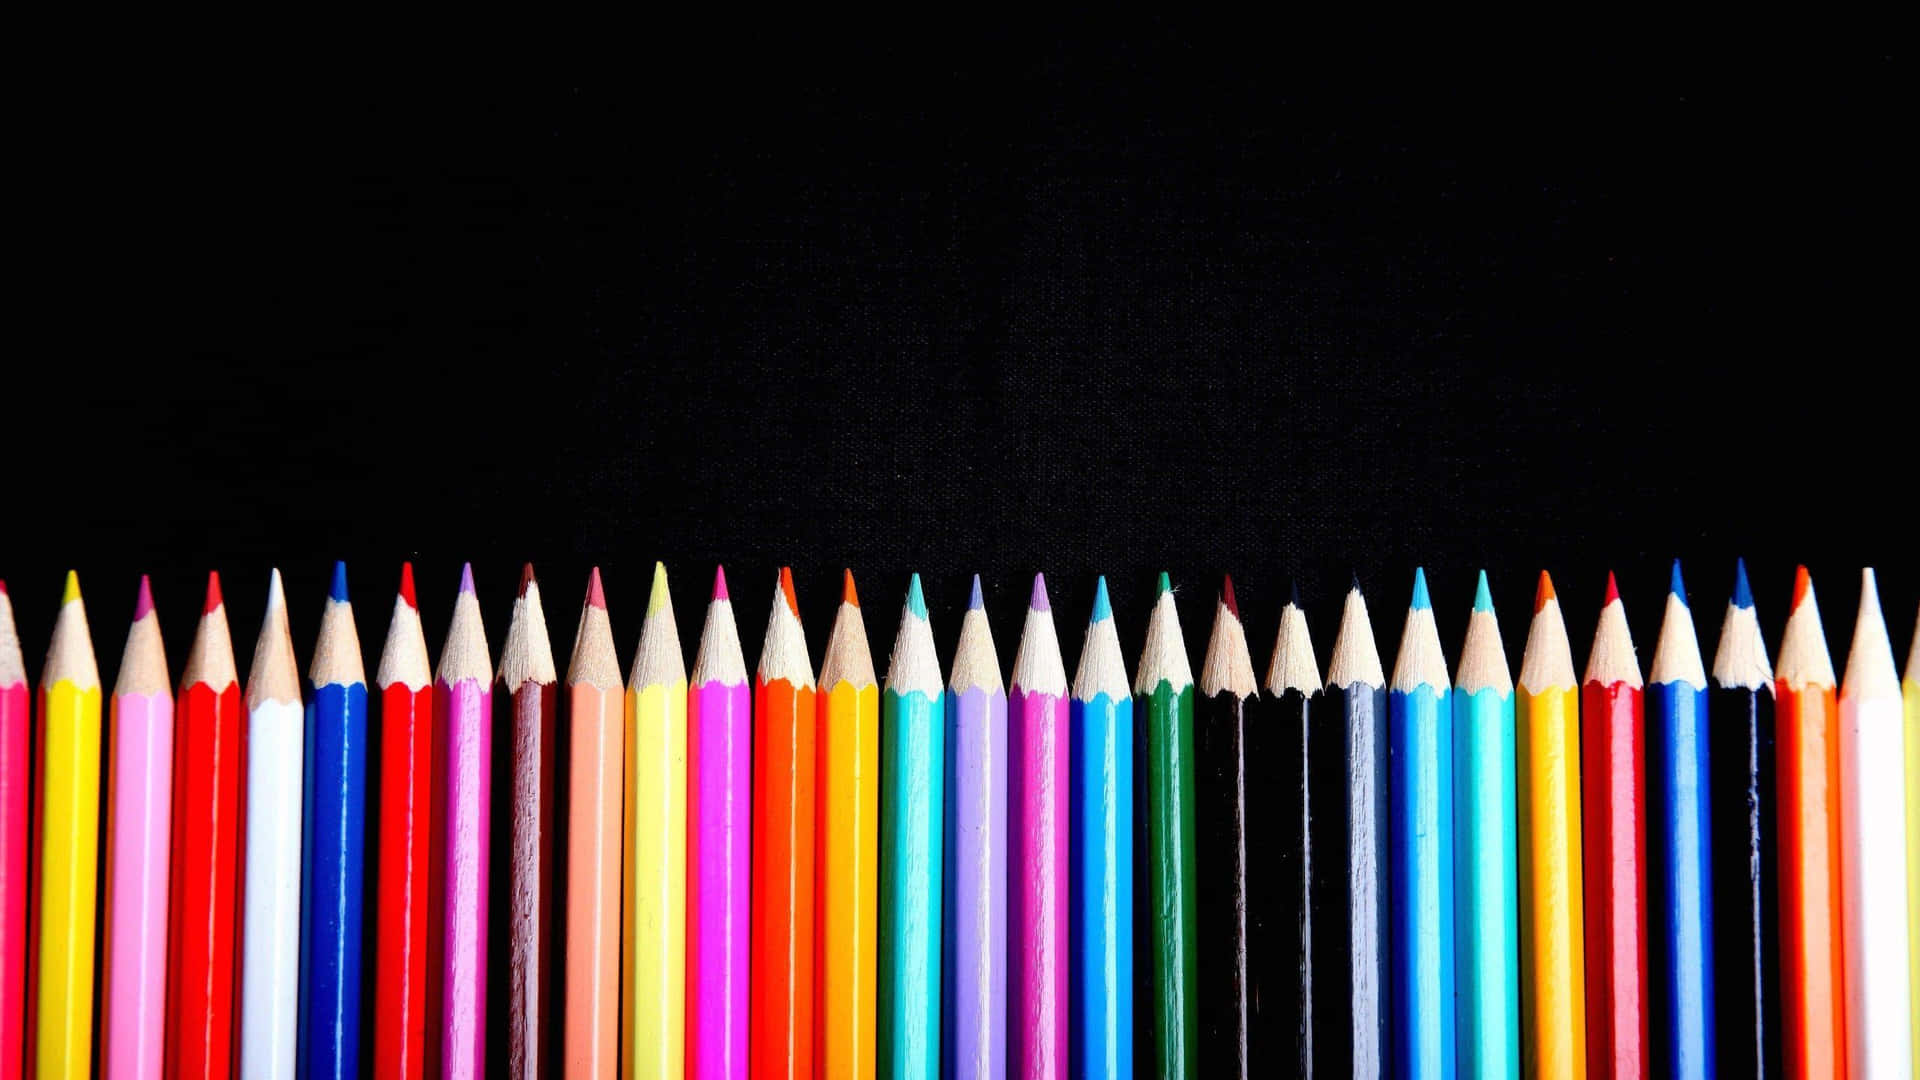 Crayon Rainbow: A Close-up View